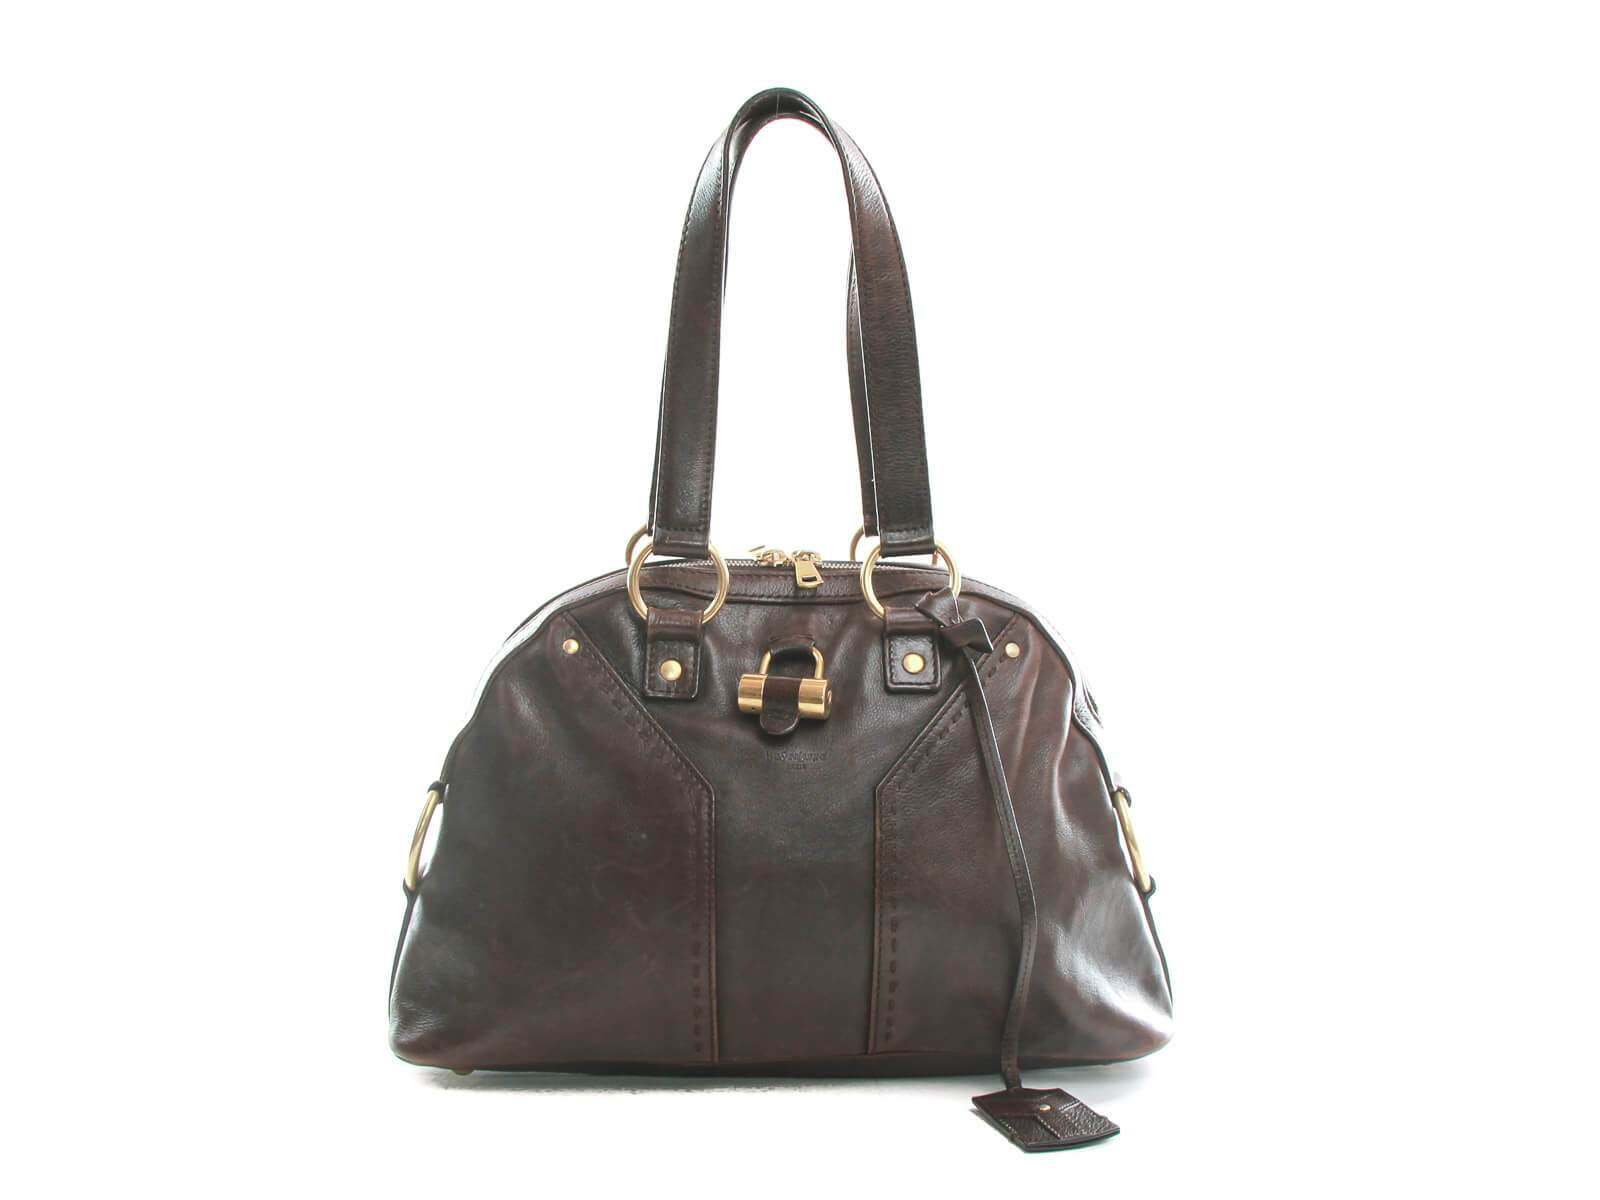 Yves Saint Laurent Muse Brown Leather Satchel Bag